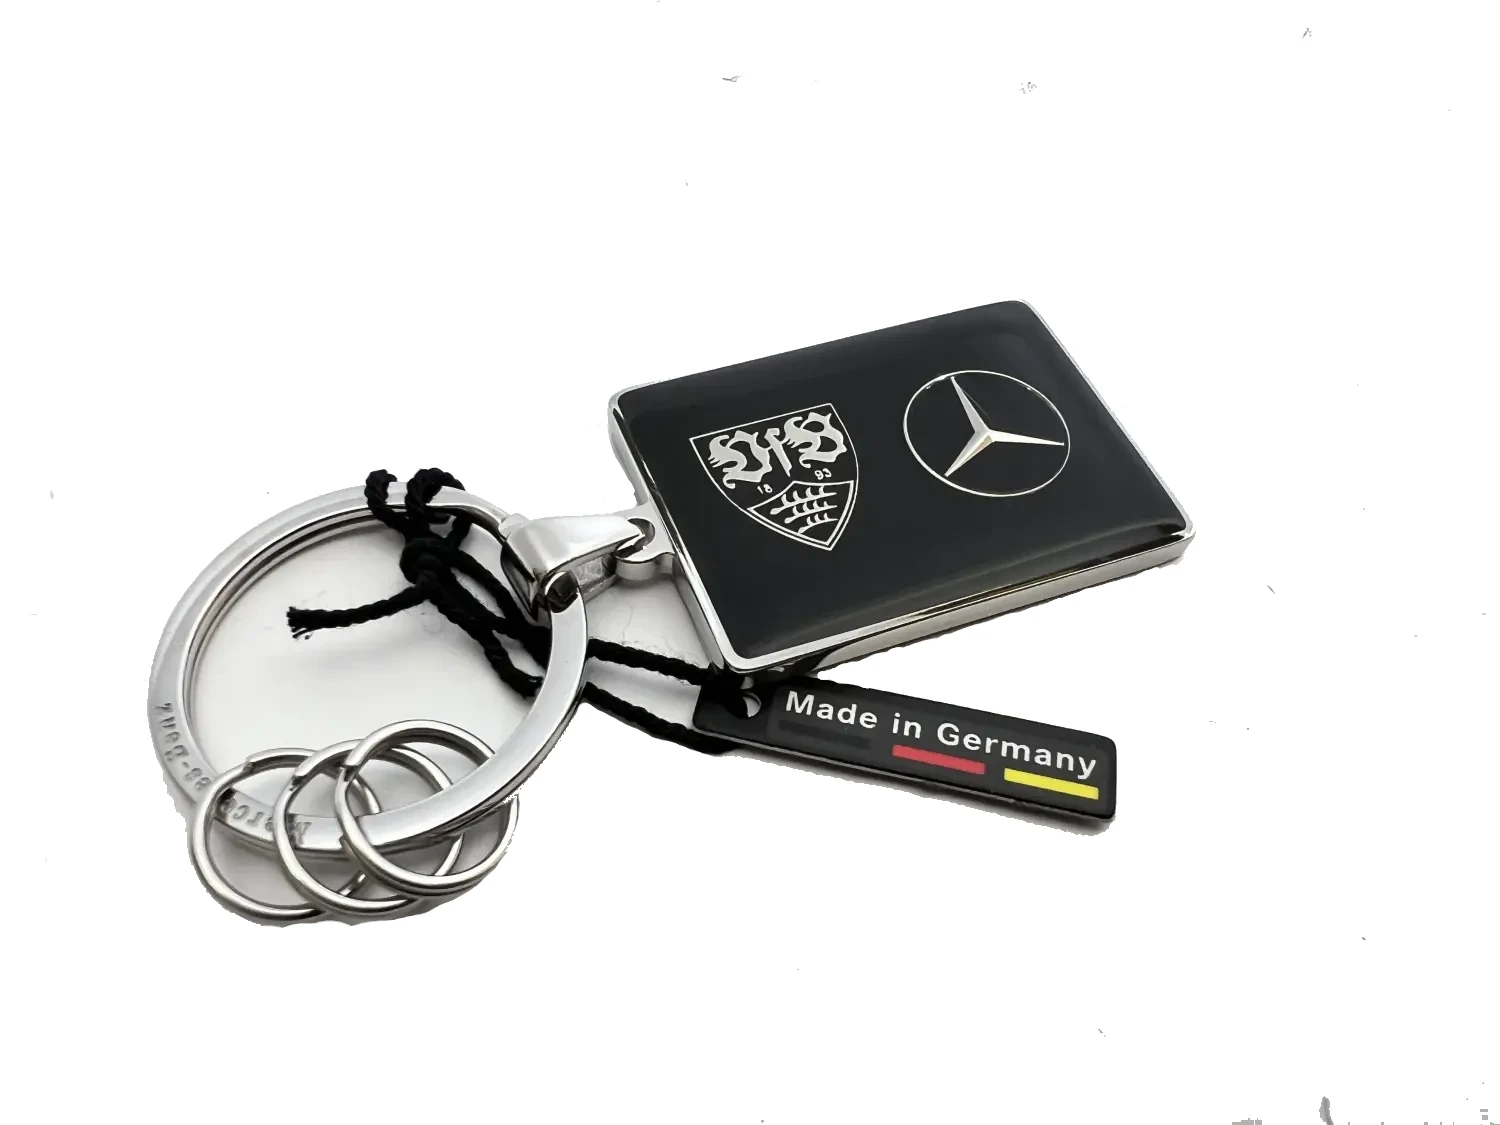 Gancio per chiavi Mercedes Benz in acciaio inox